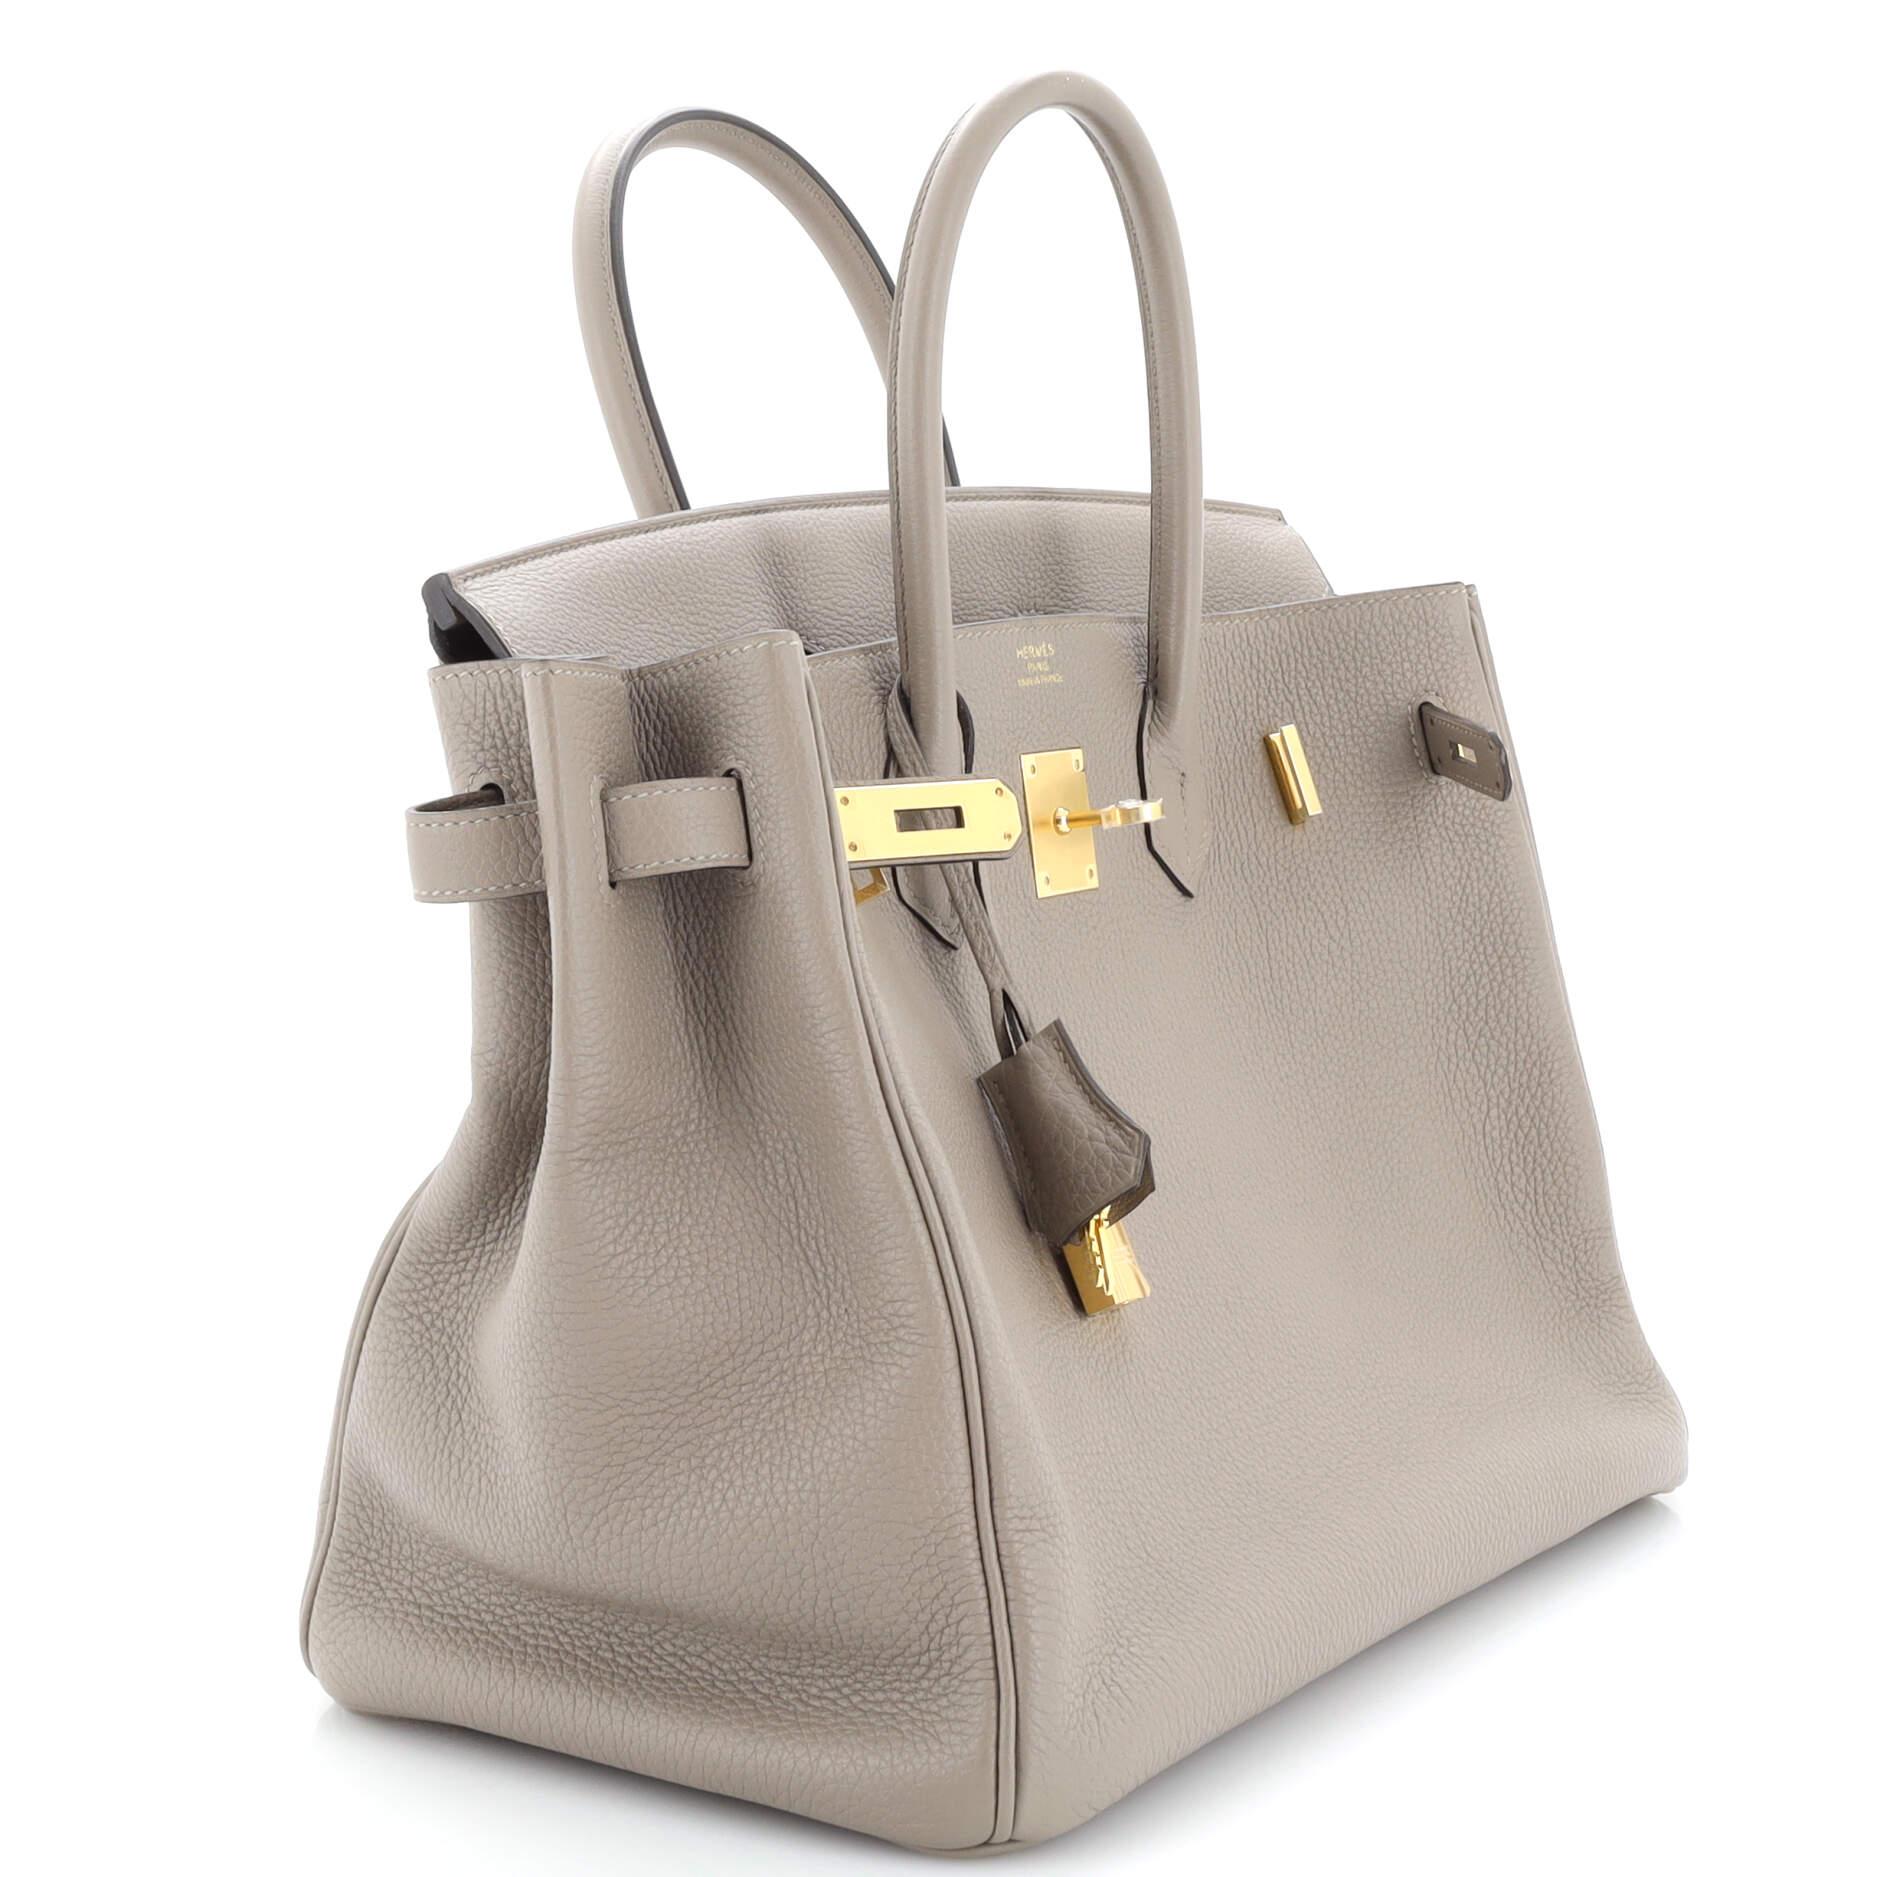 Hermes Birkin Handbag Grey Togo with Gold Hardware 35 7